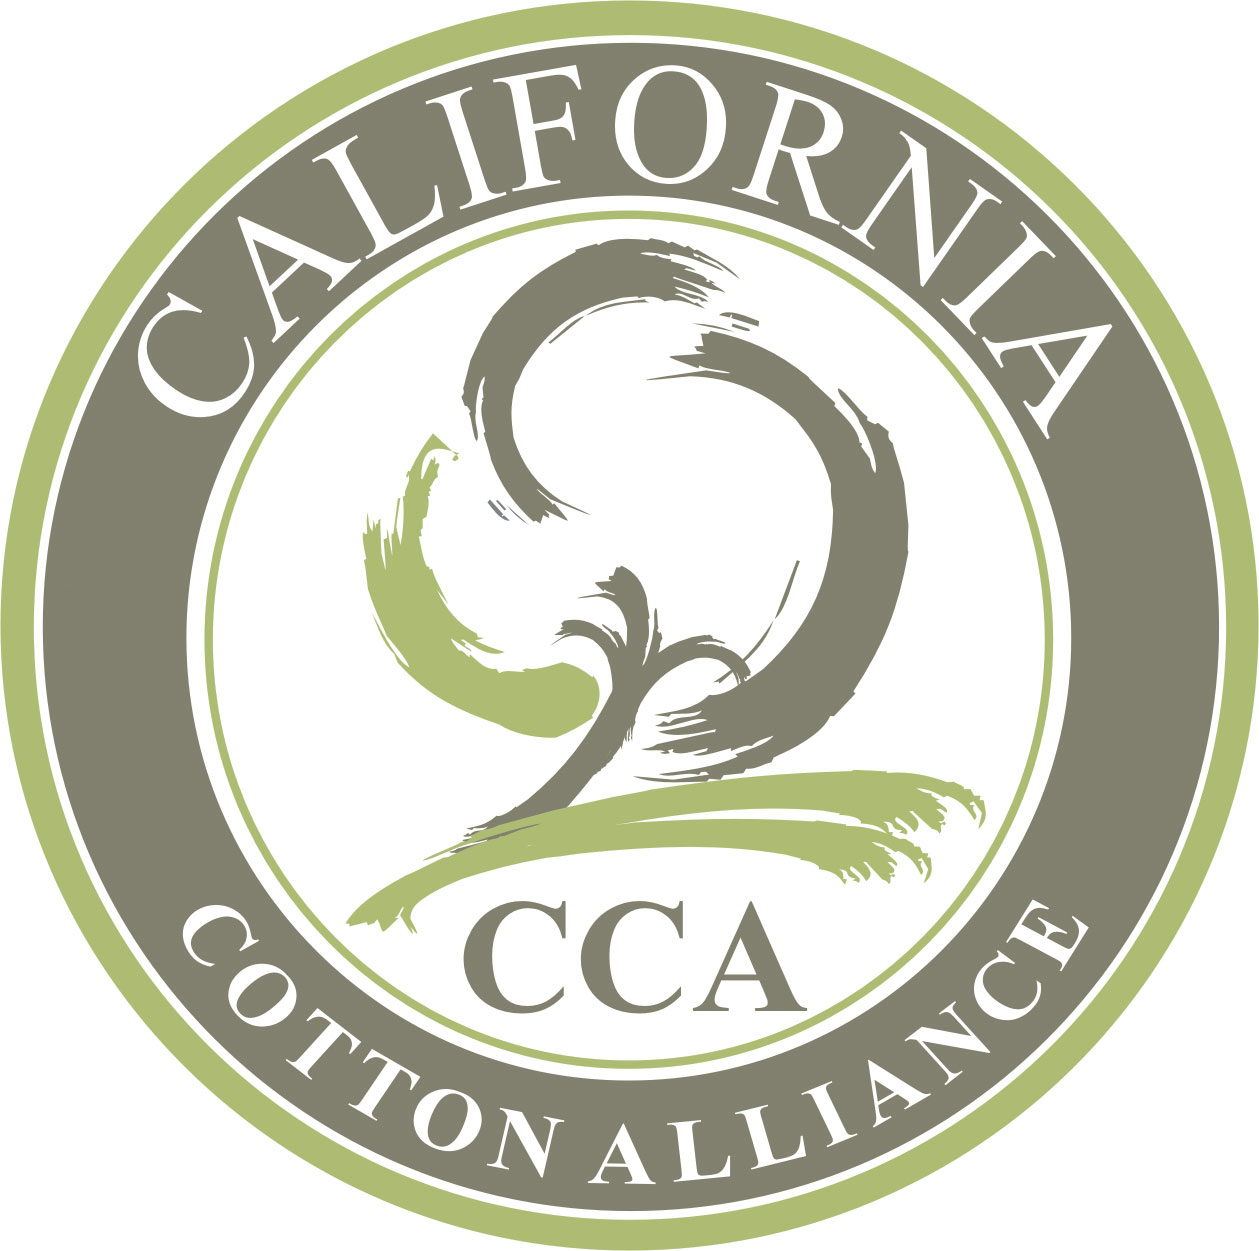 California Cotton Alliance